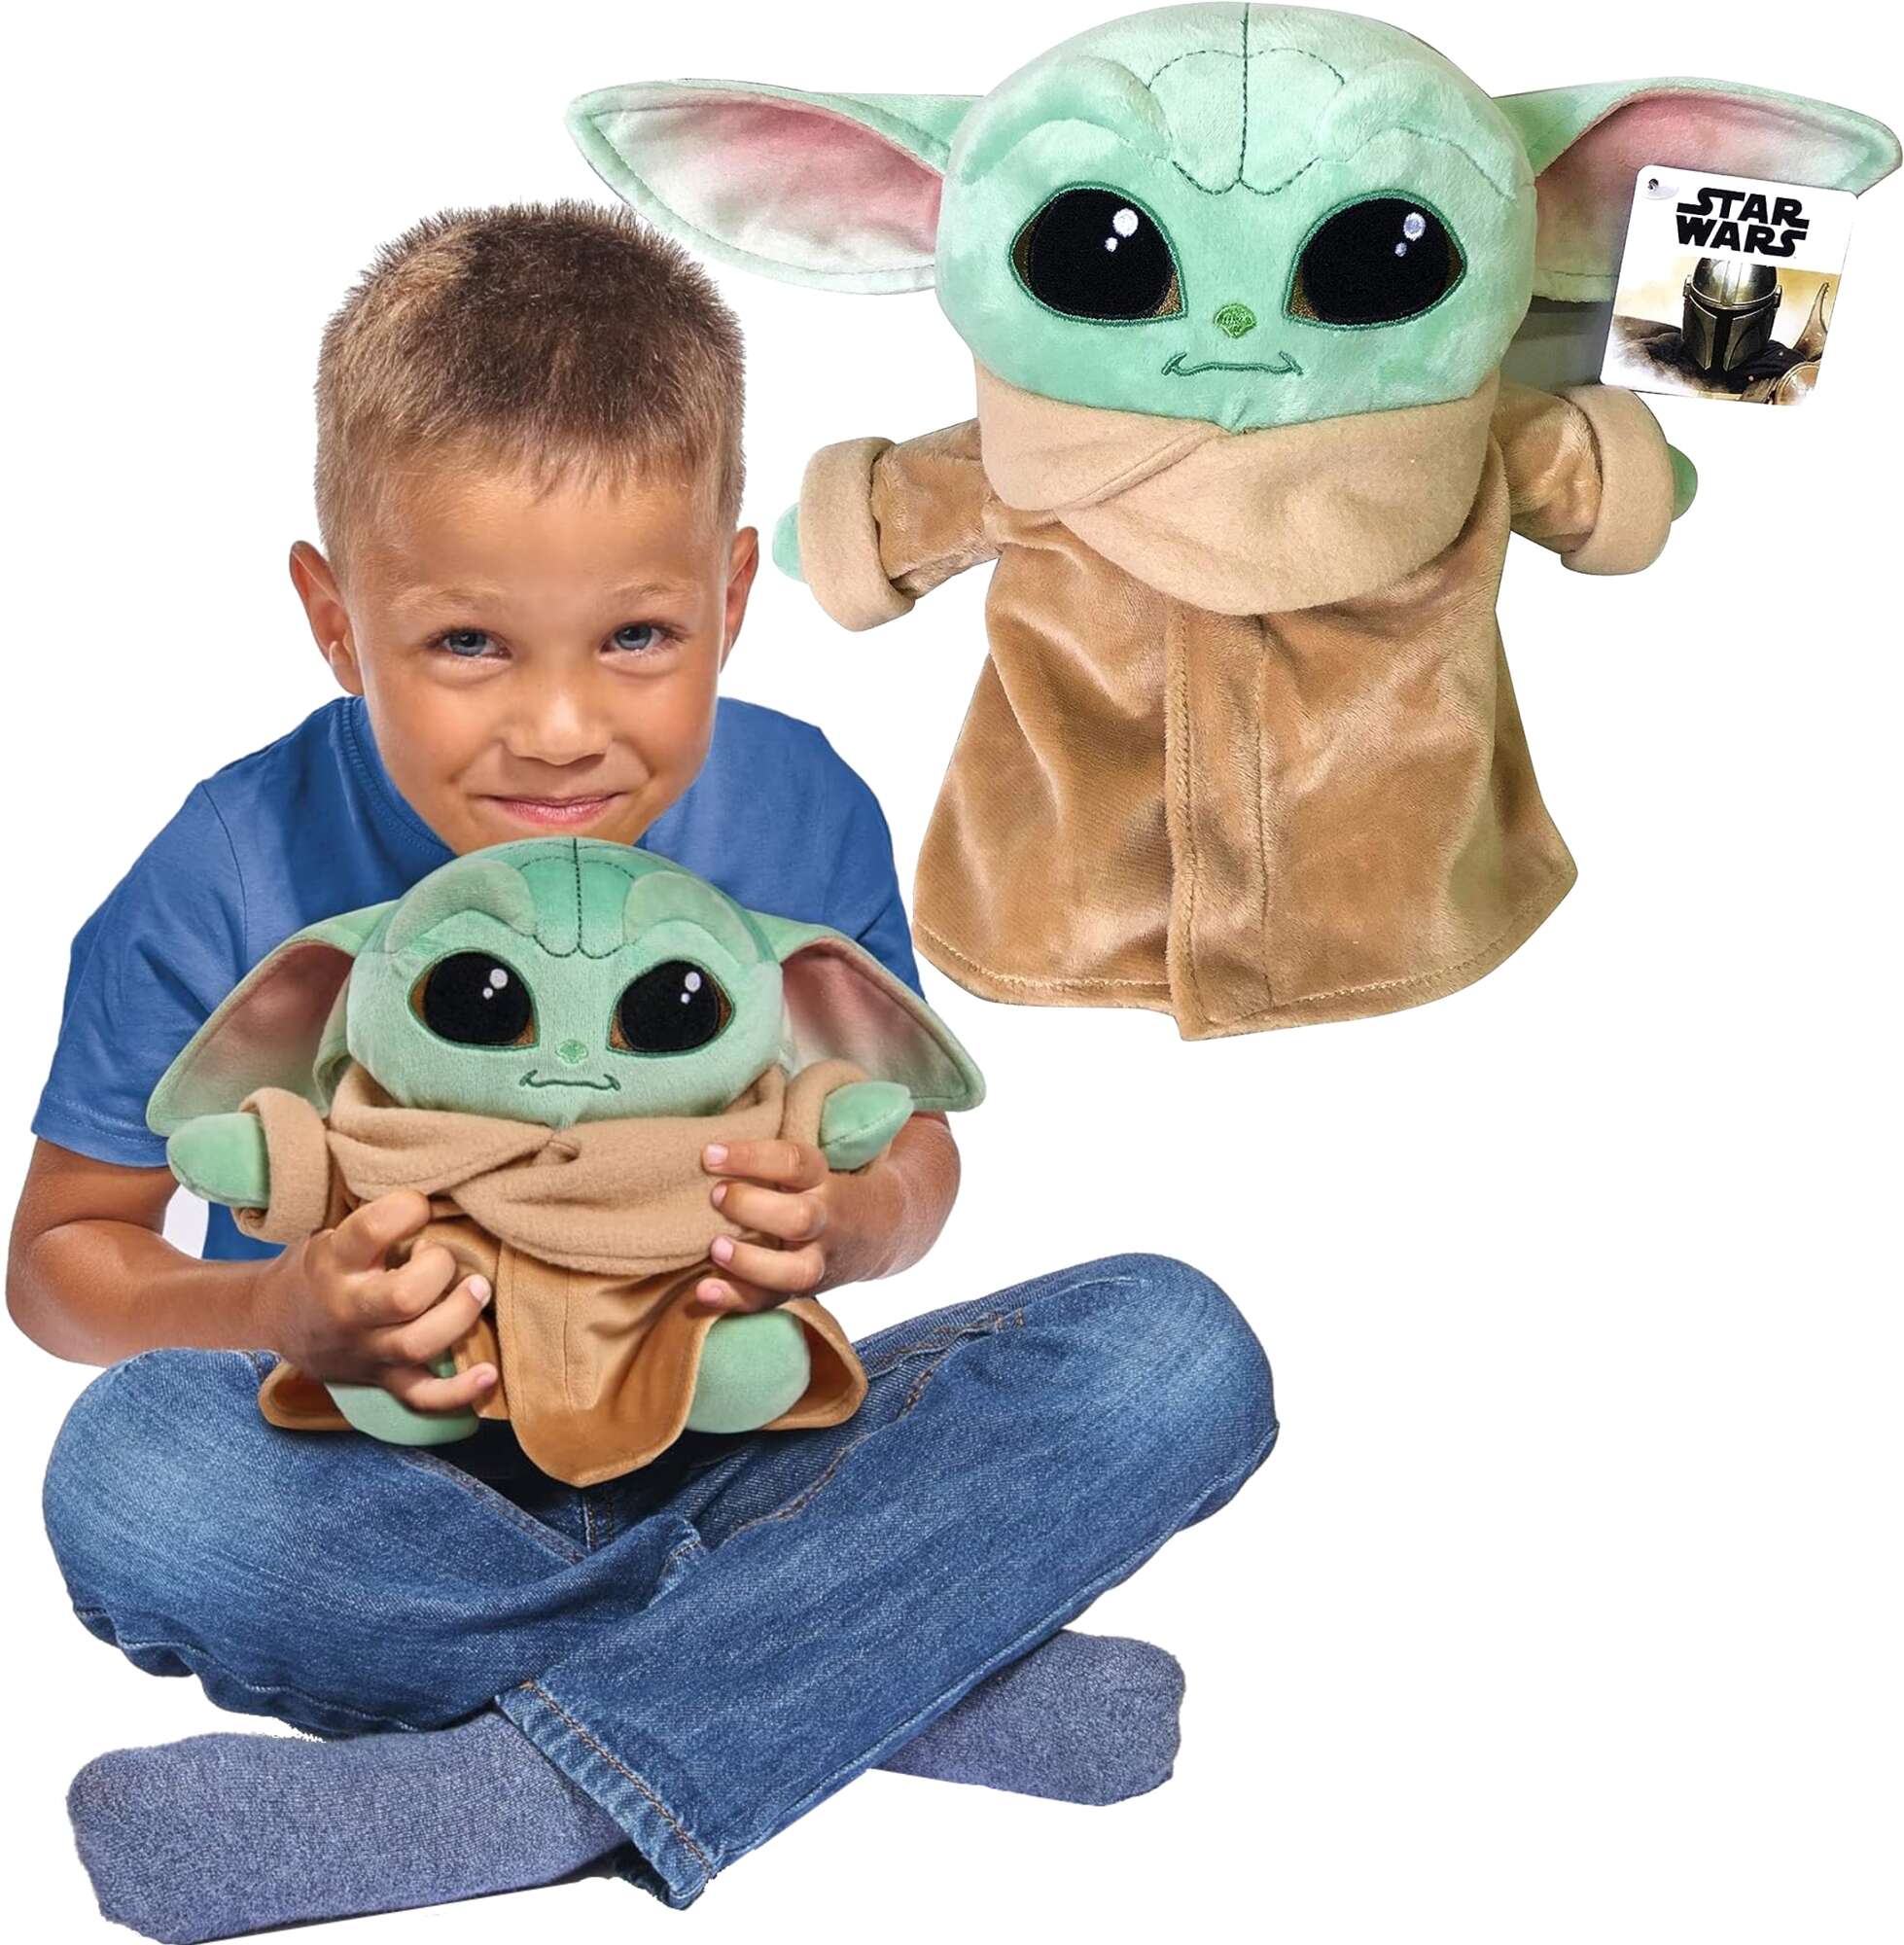 Star Wars) Star Wars Baby Yoda Plüschtier in multicolor